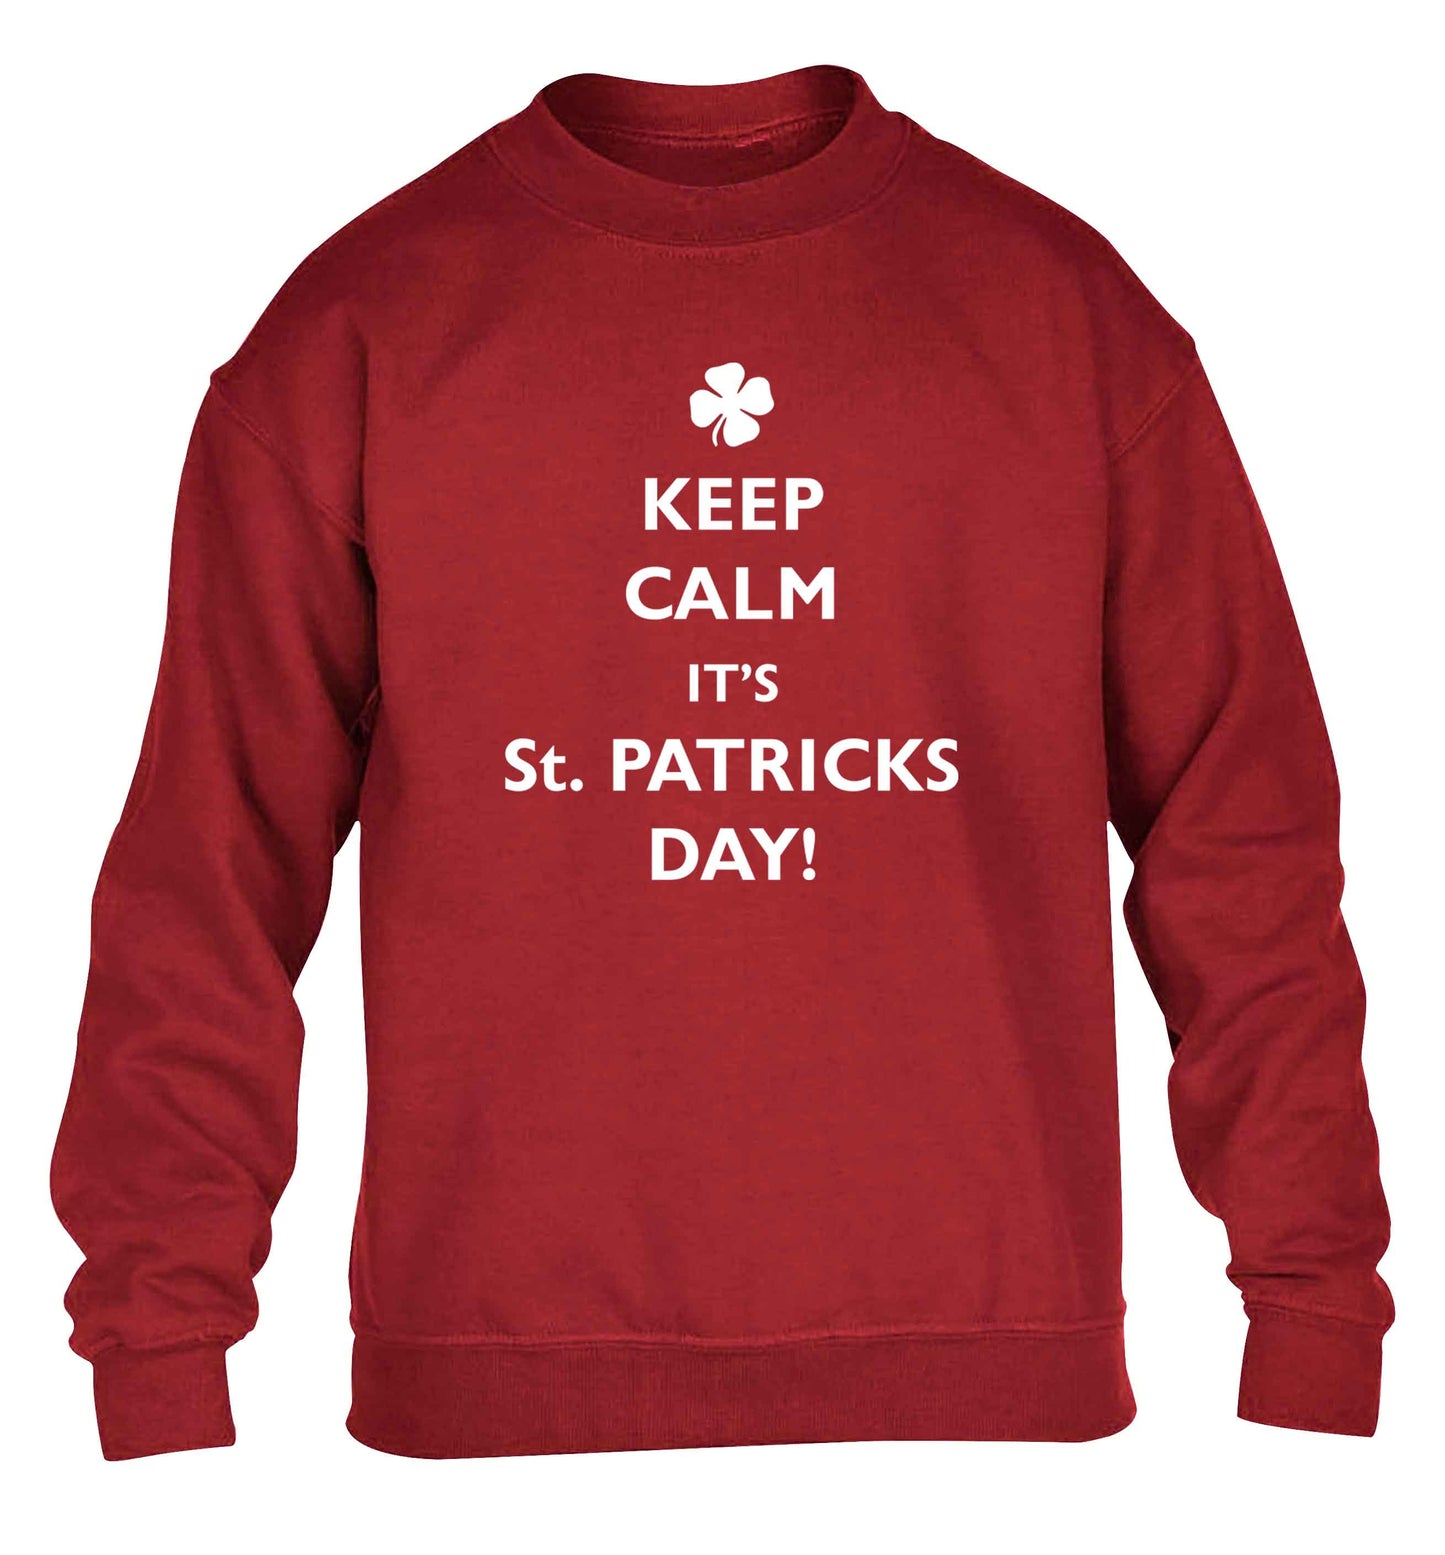 Keep calm it's St.Patricks day children's grey sweater 12-13 Years